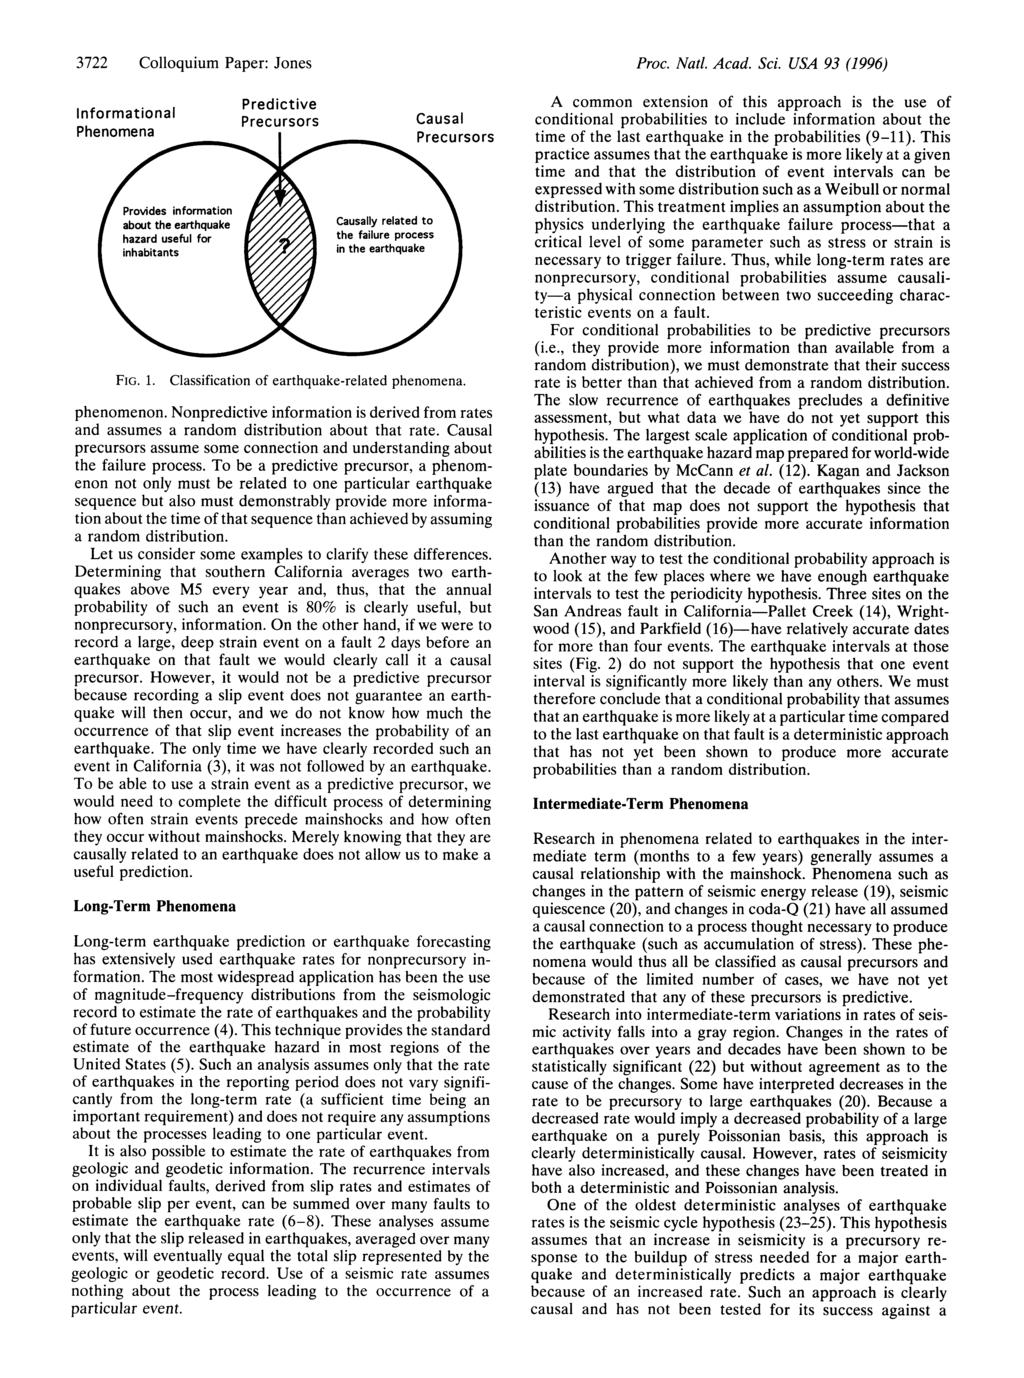 722 Colloquium Paper: Jones Informational Phenomena FIG.. Classification of earthquake-related phe phenomenon.